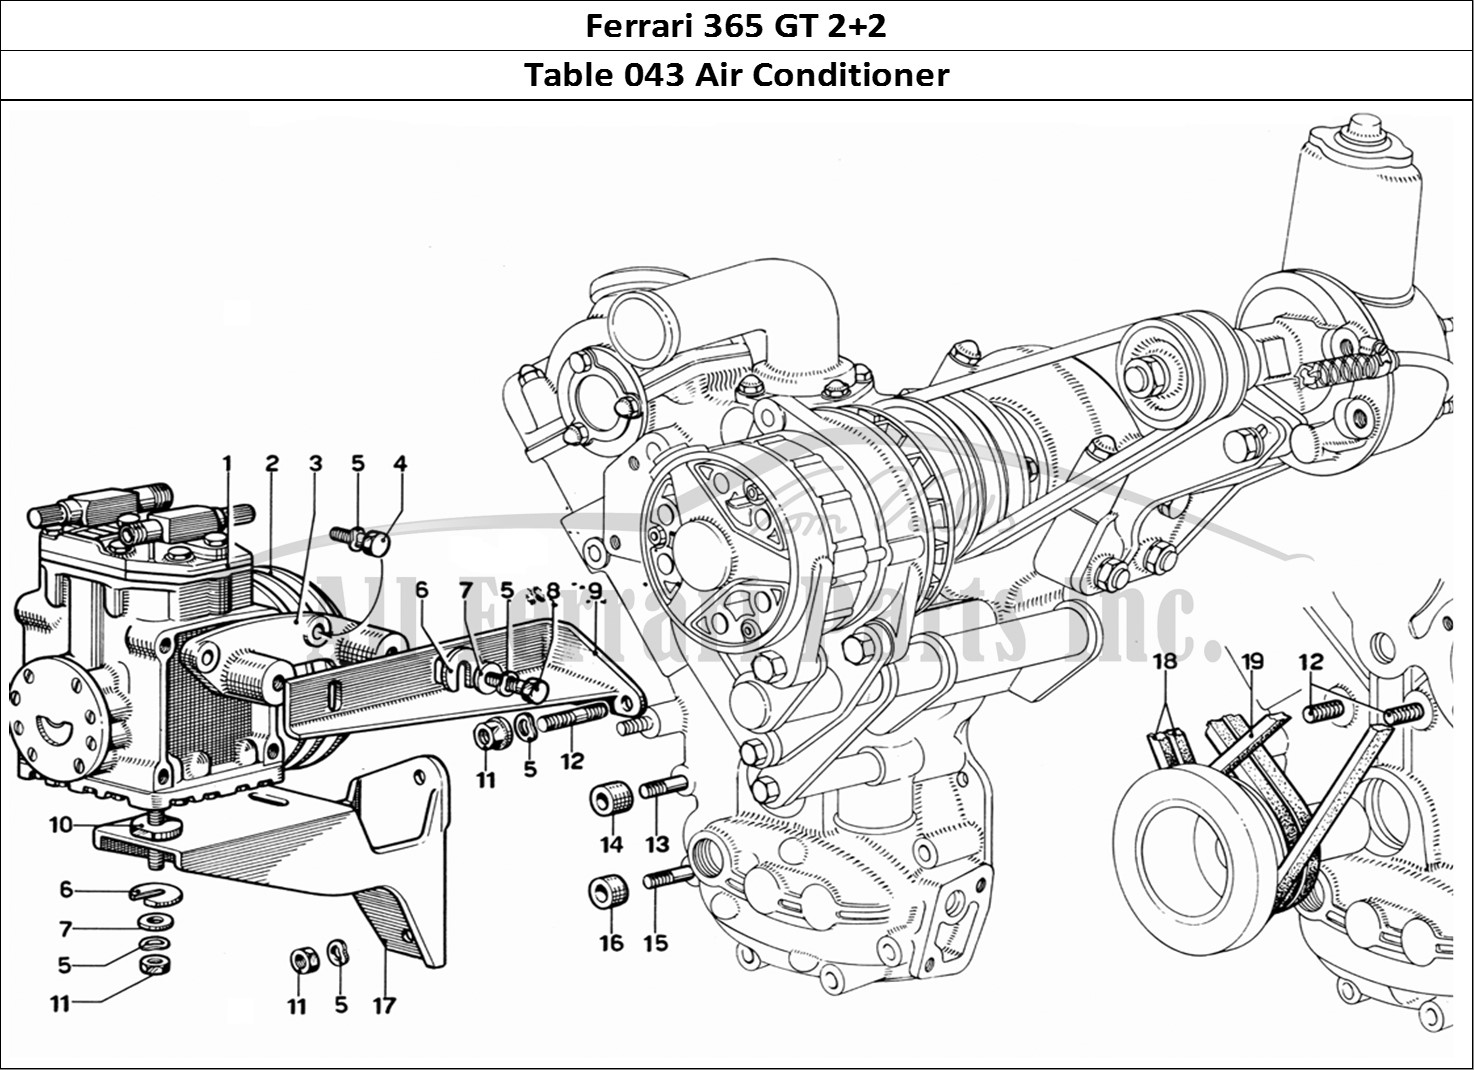 Ferrari Parts Ferrari 365 GT 2+2 (Mechanical) Page 043 Air Conditioning